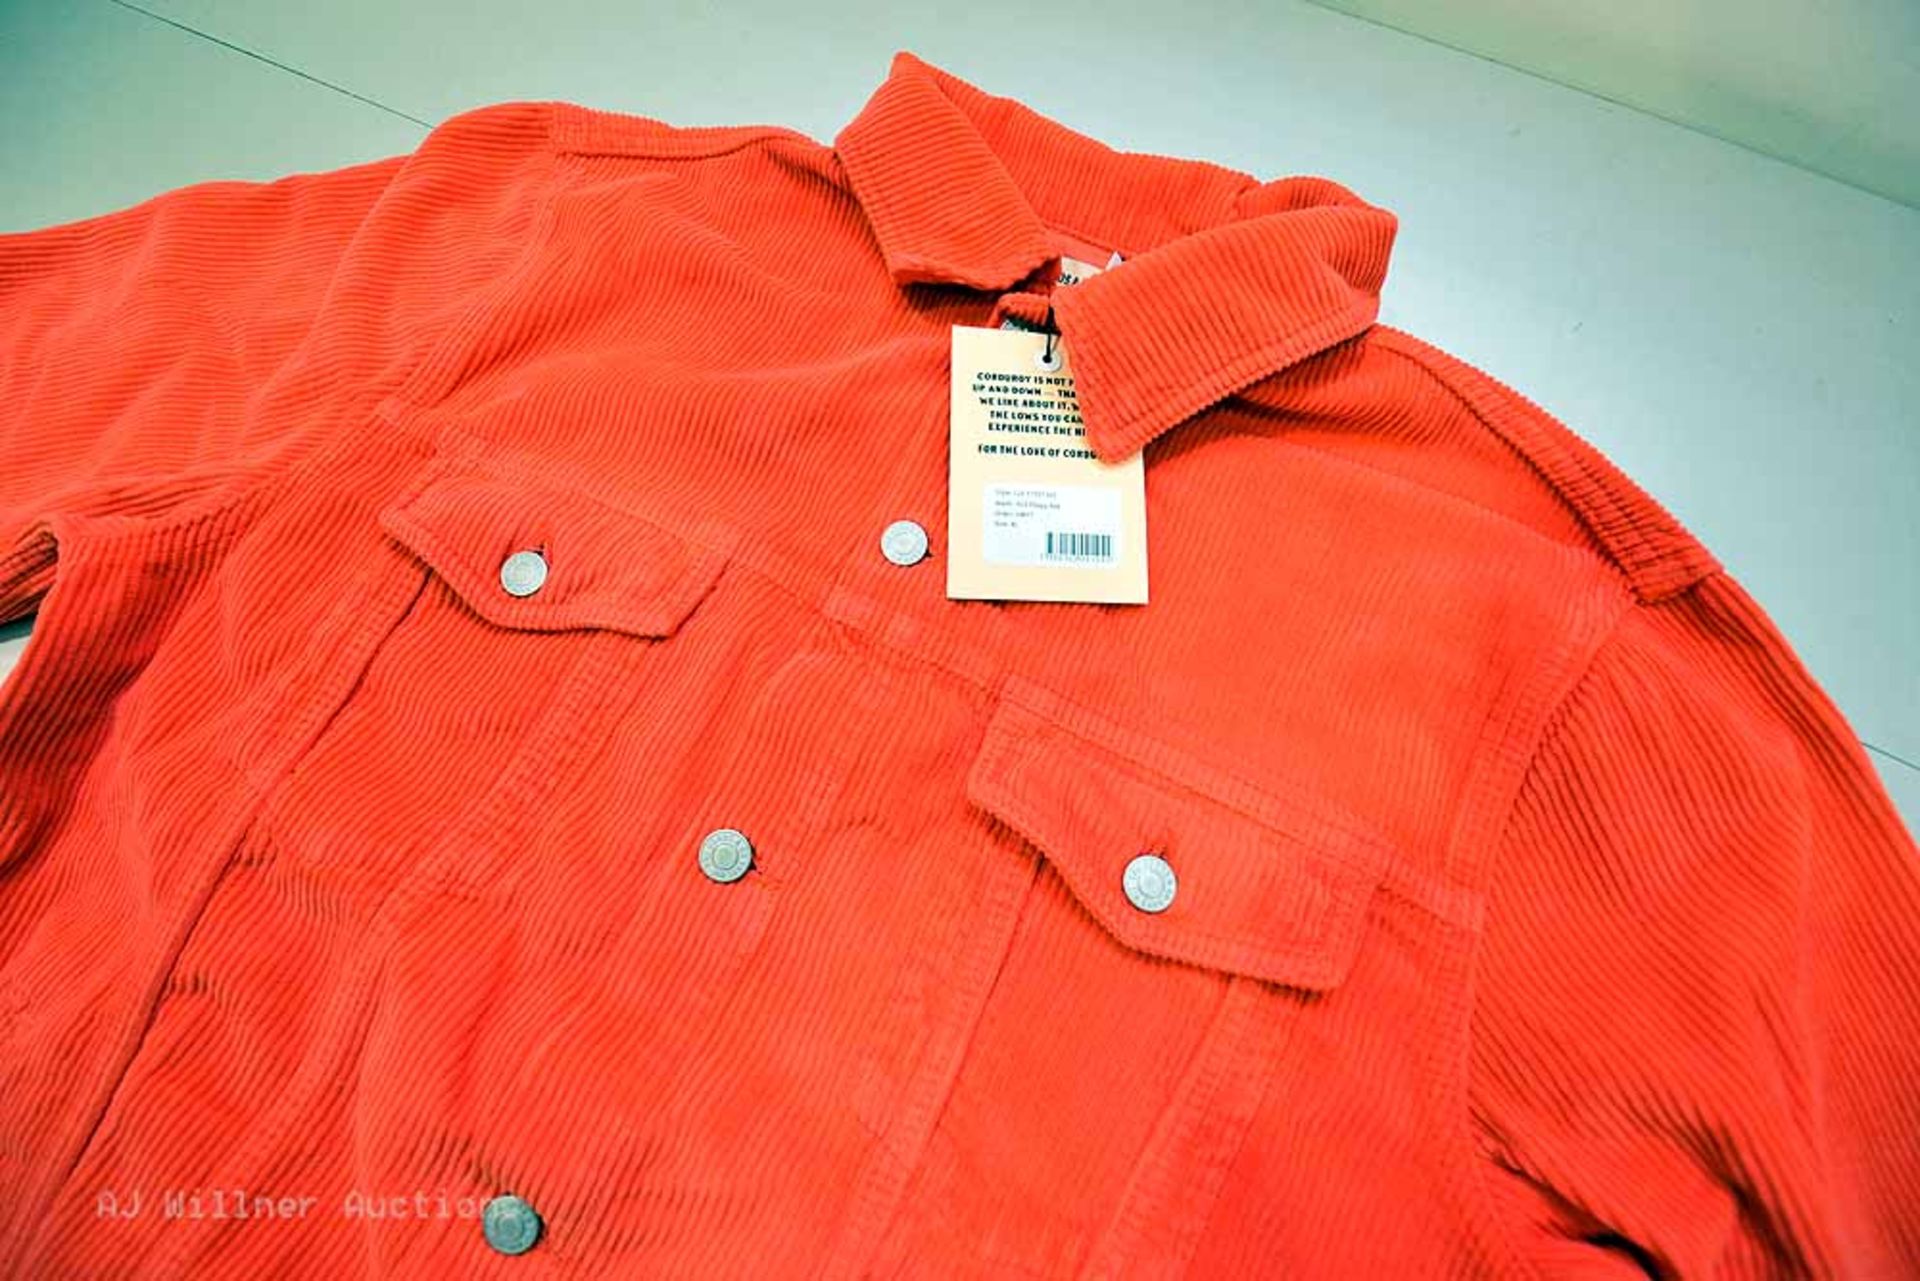 The Cords & Co."Cut" Style, Womens Collard Long Sleeve Jacket(Ecru)Coffee Brown,Denim Blue,Poppy Red - Image 8 of 14